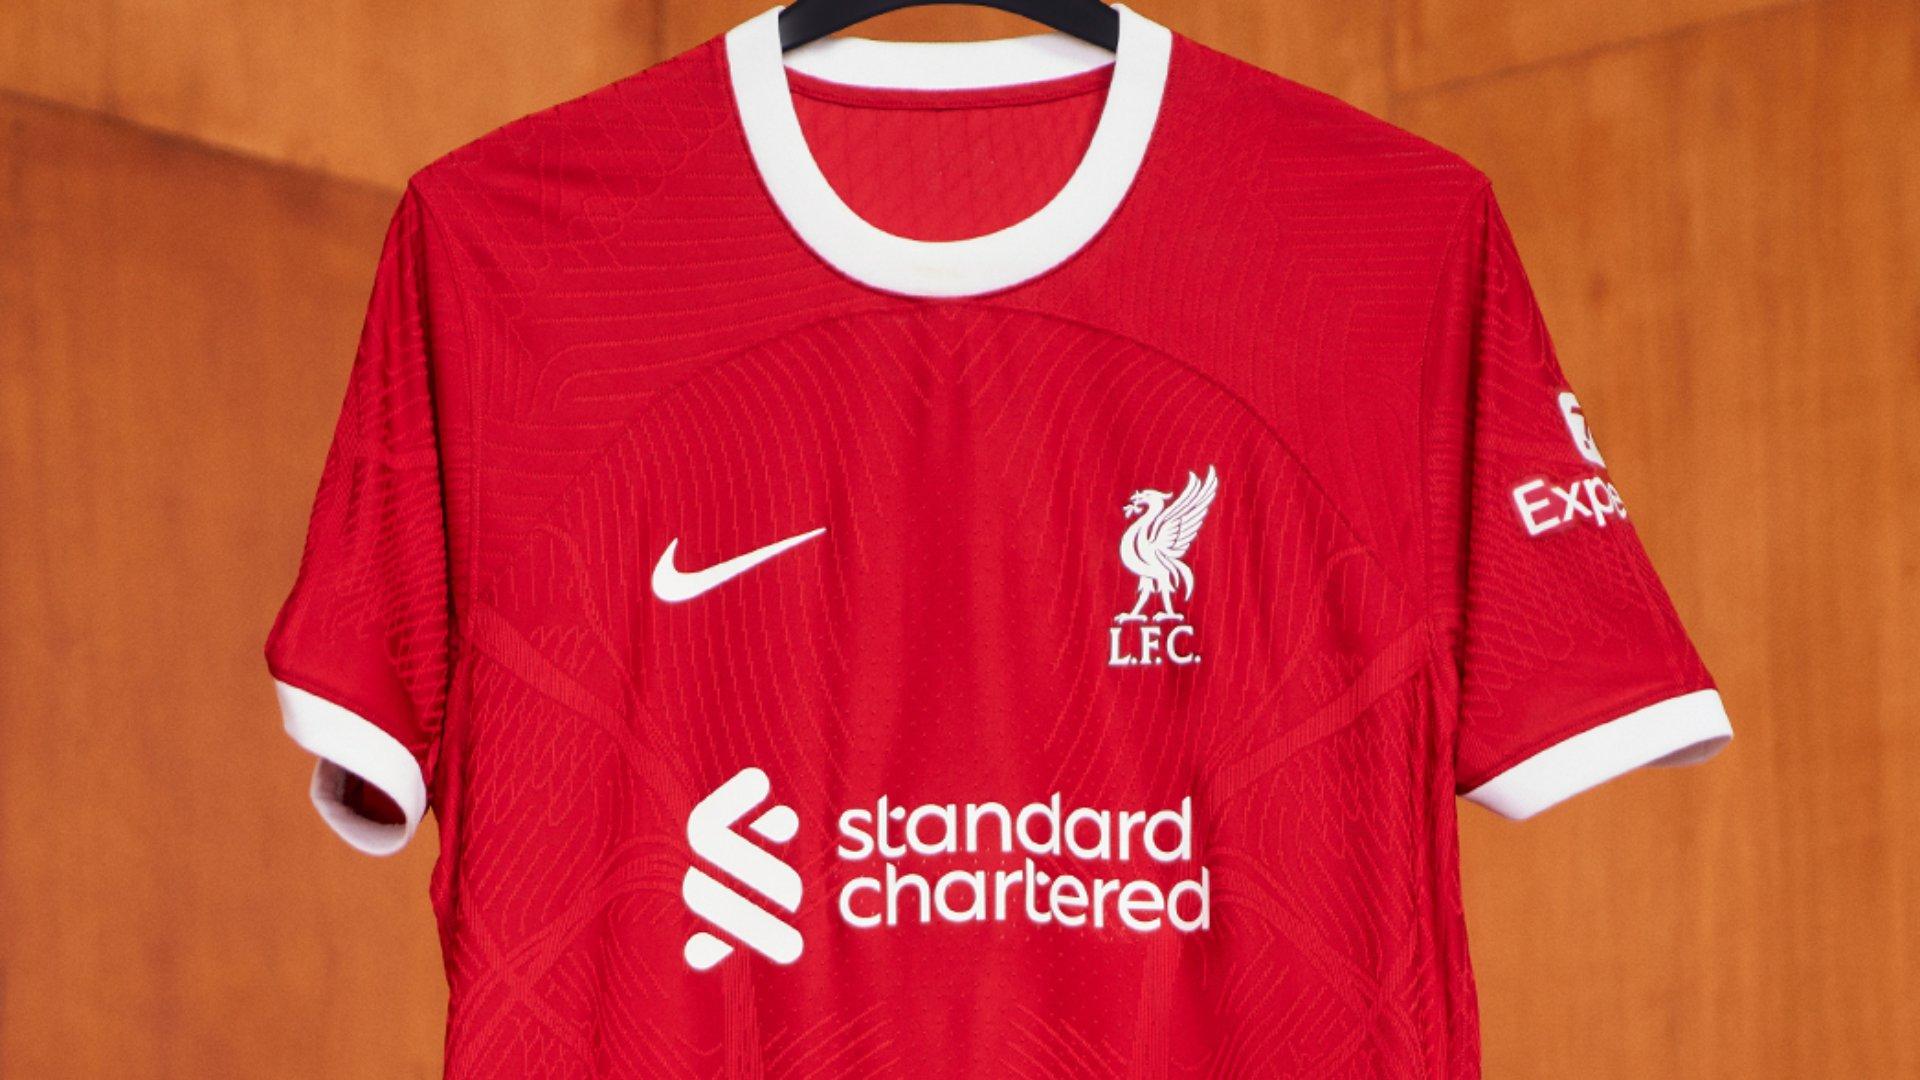 The Football Kit Blog: New Liverpool 08/09 Shirt Makes its Debut